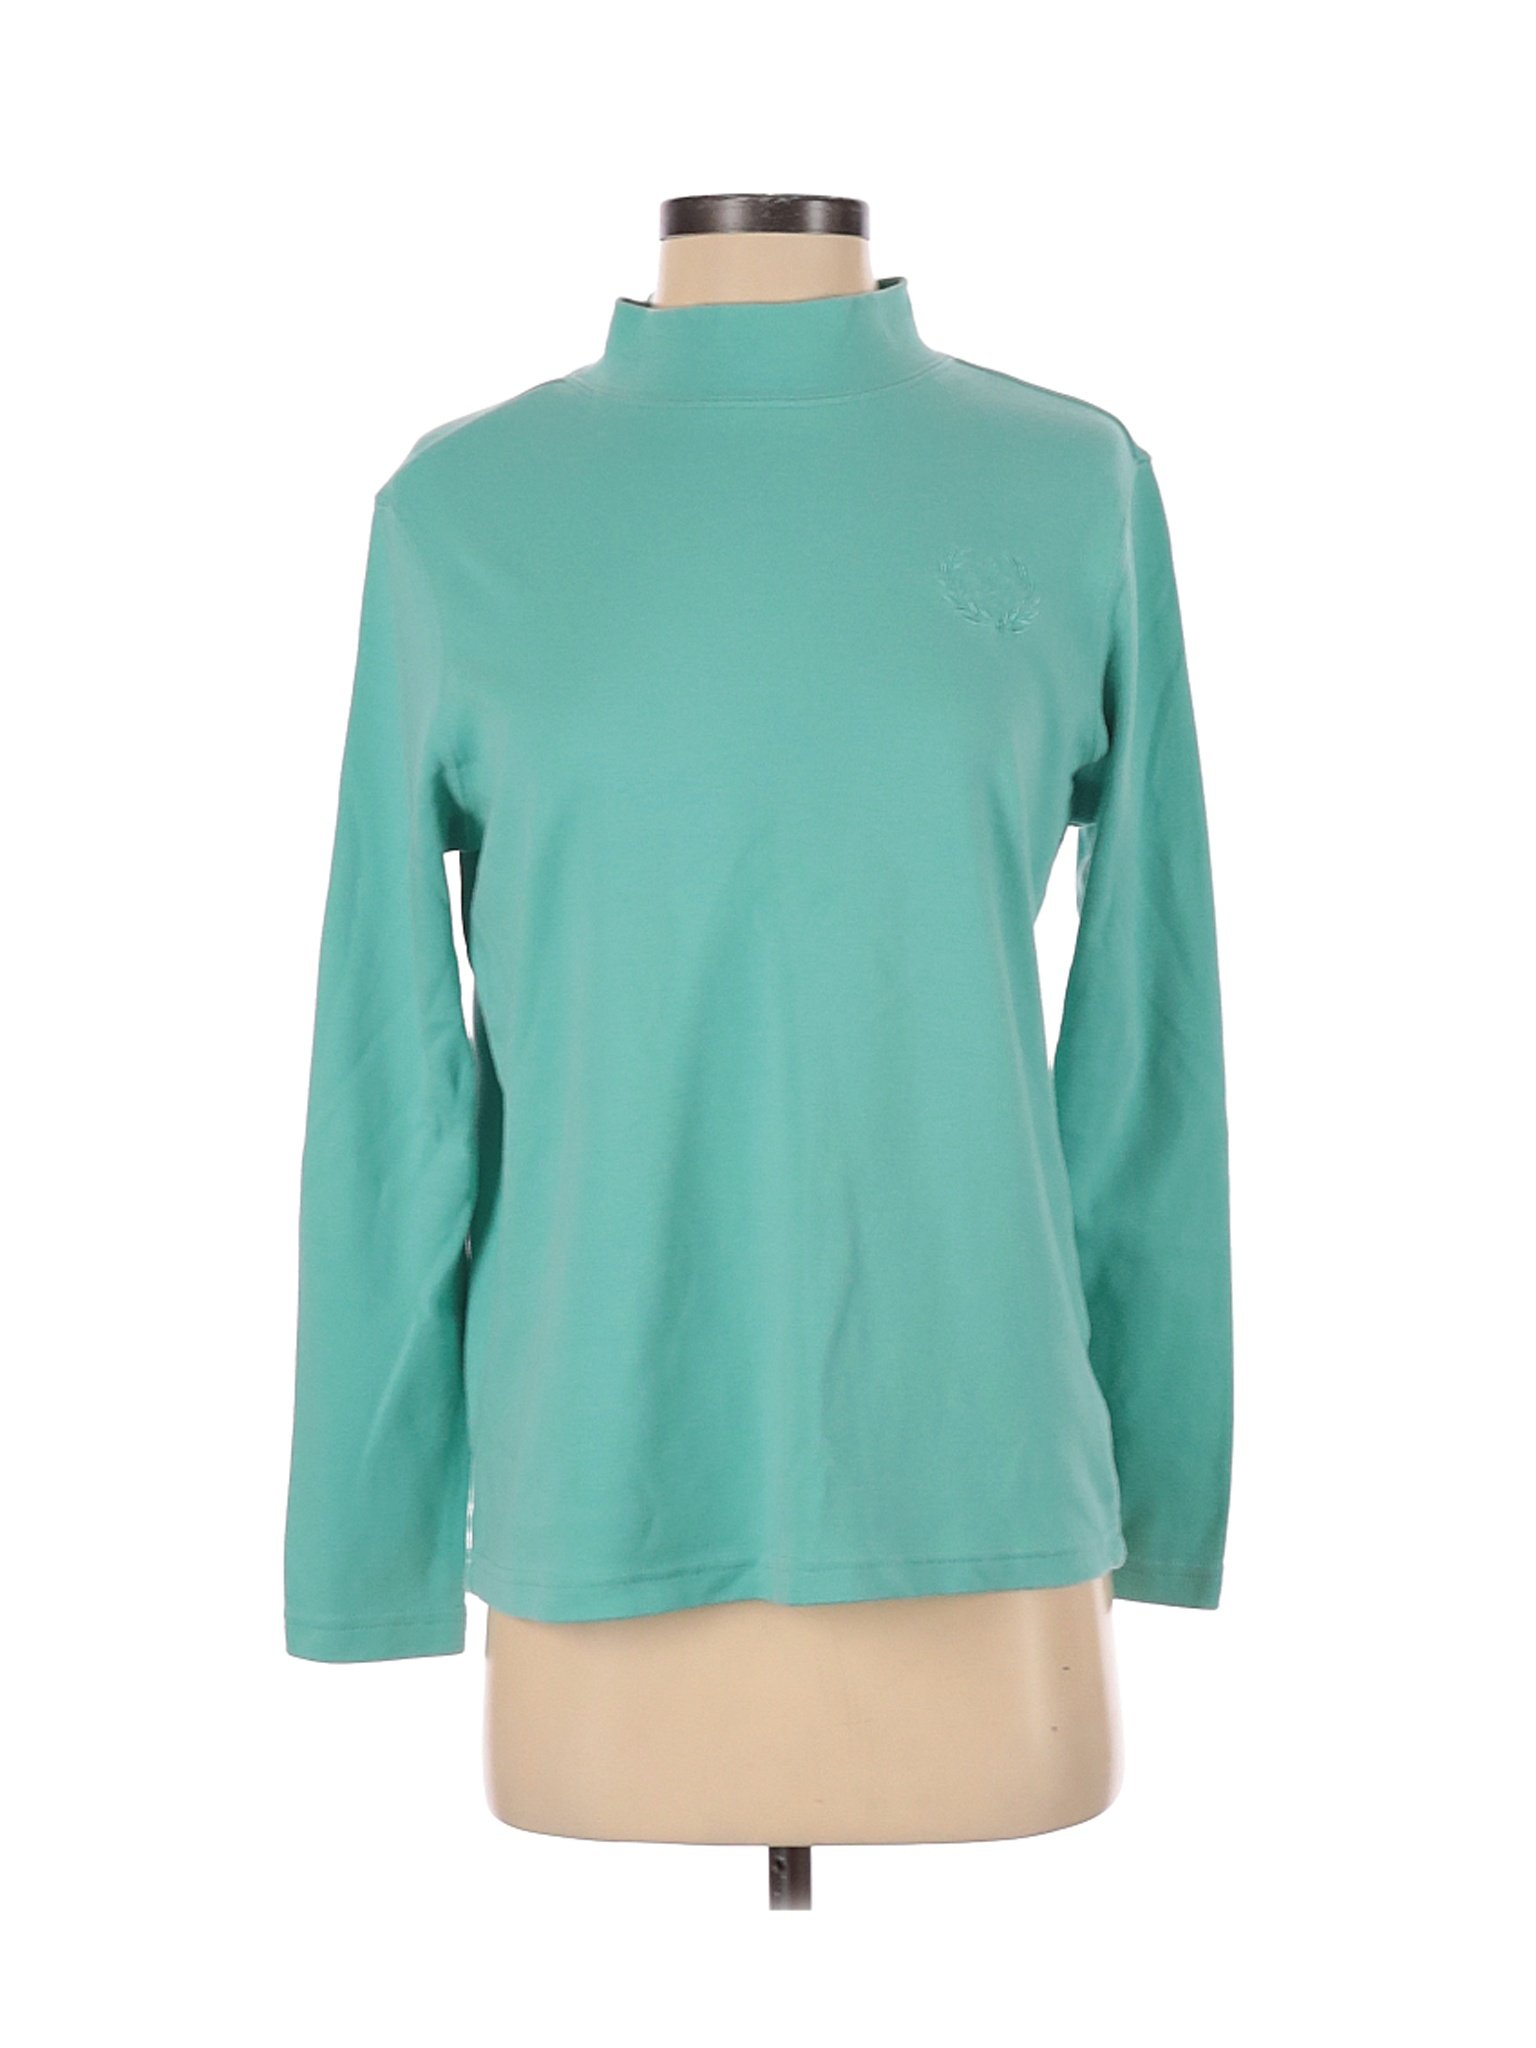 Blair Women Blue Turtleneck Sweater S | eBay